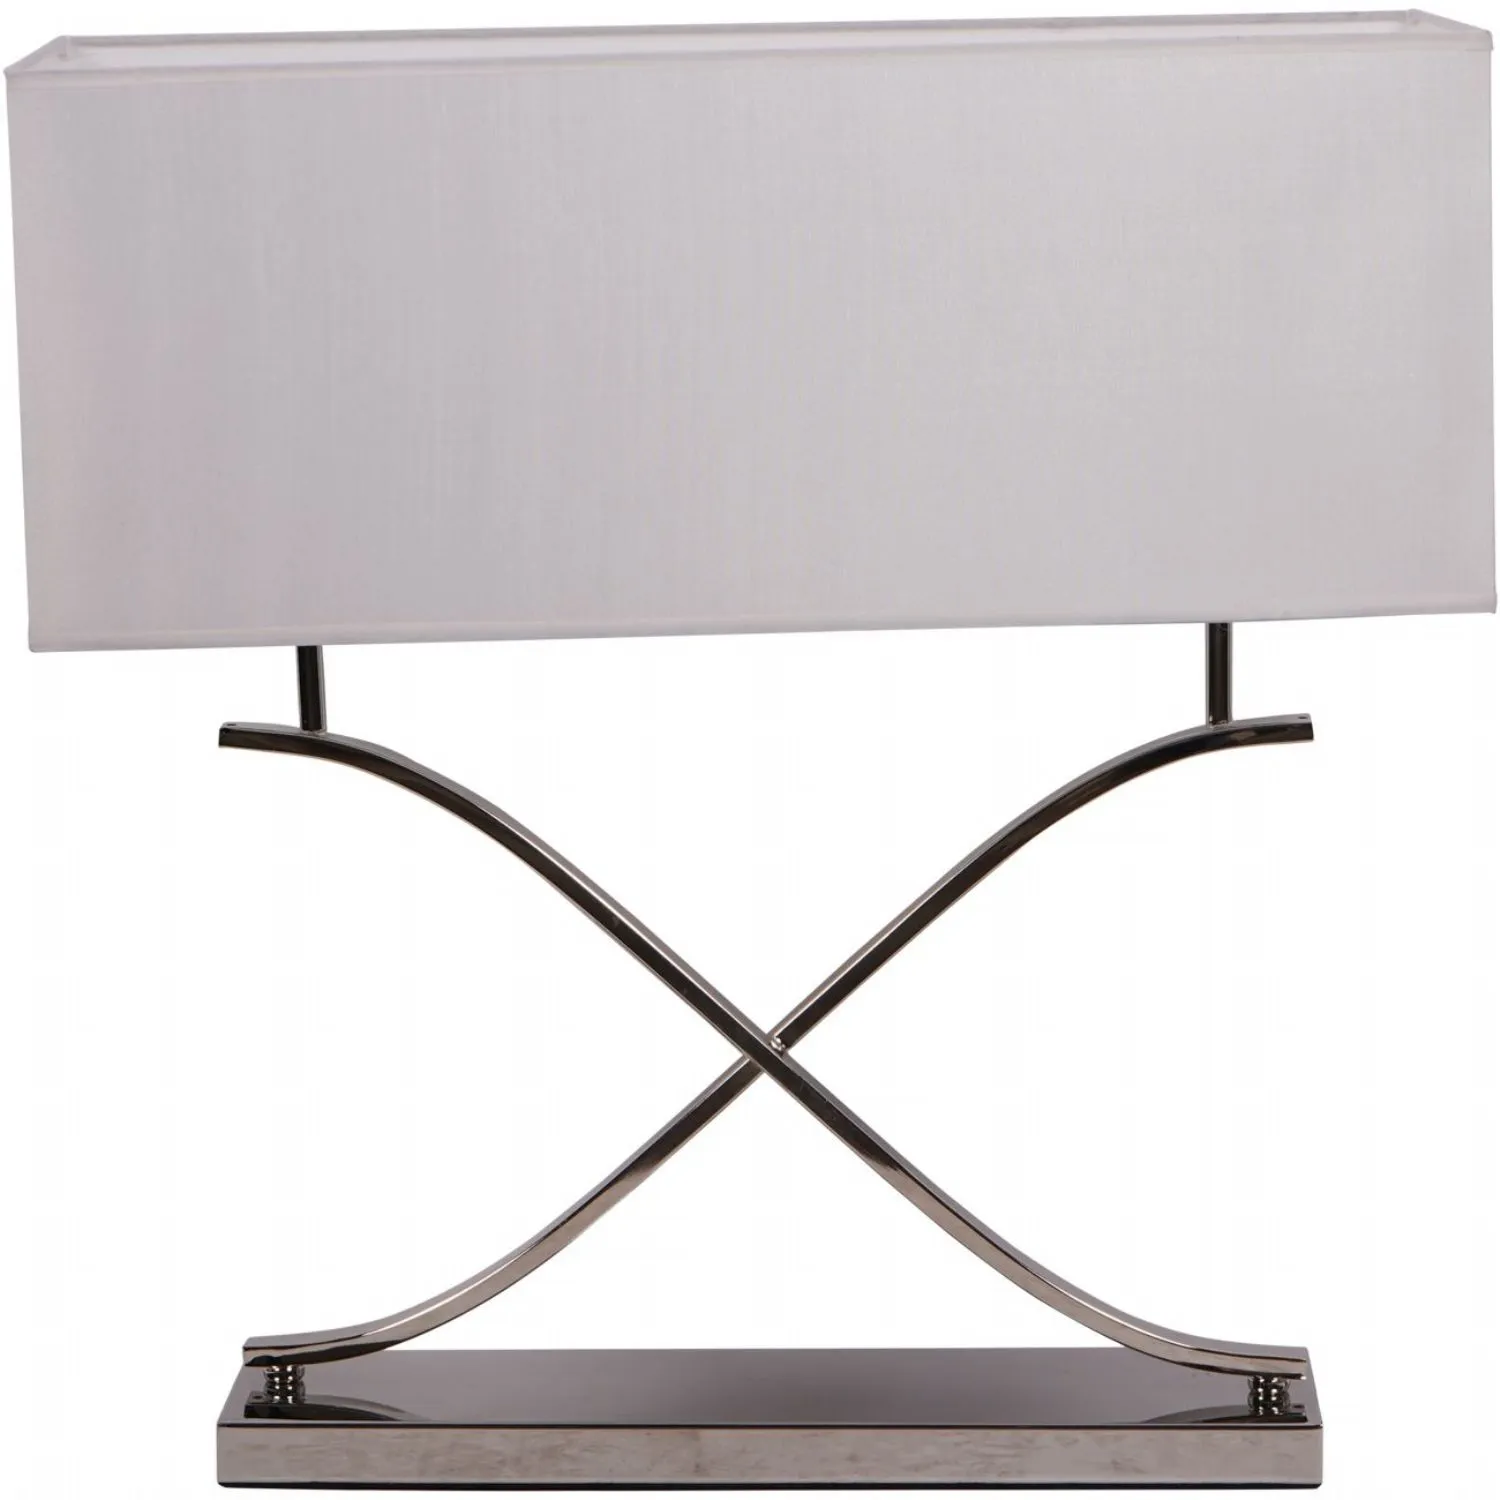 Celeste Table Lamp with Rectangular Shade